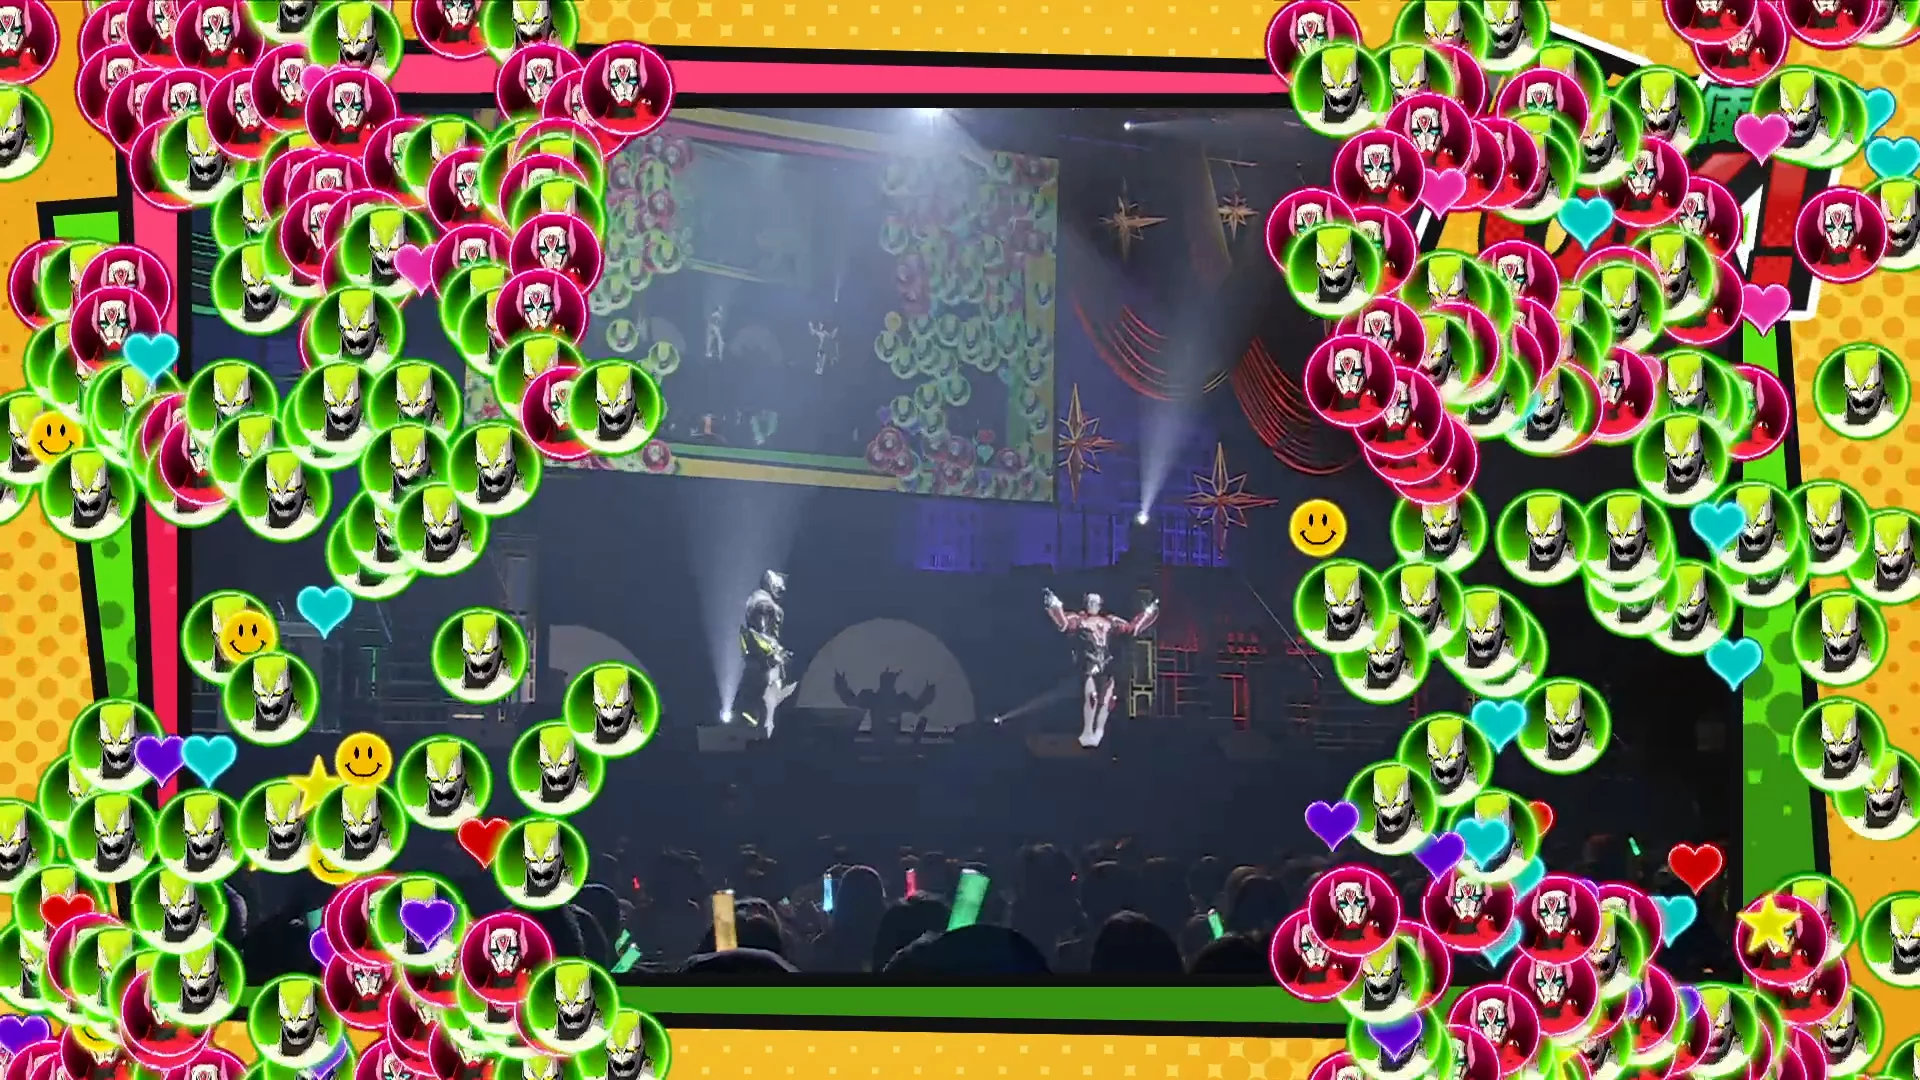 Tiger & Bunny2 PreciousEVEのライブ会場の大型スクリーンに、下から上へ泡のように流れるVisibbyのスタンプが映し出されている。